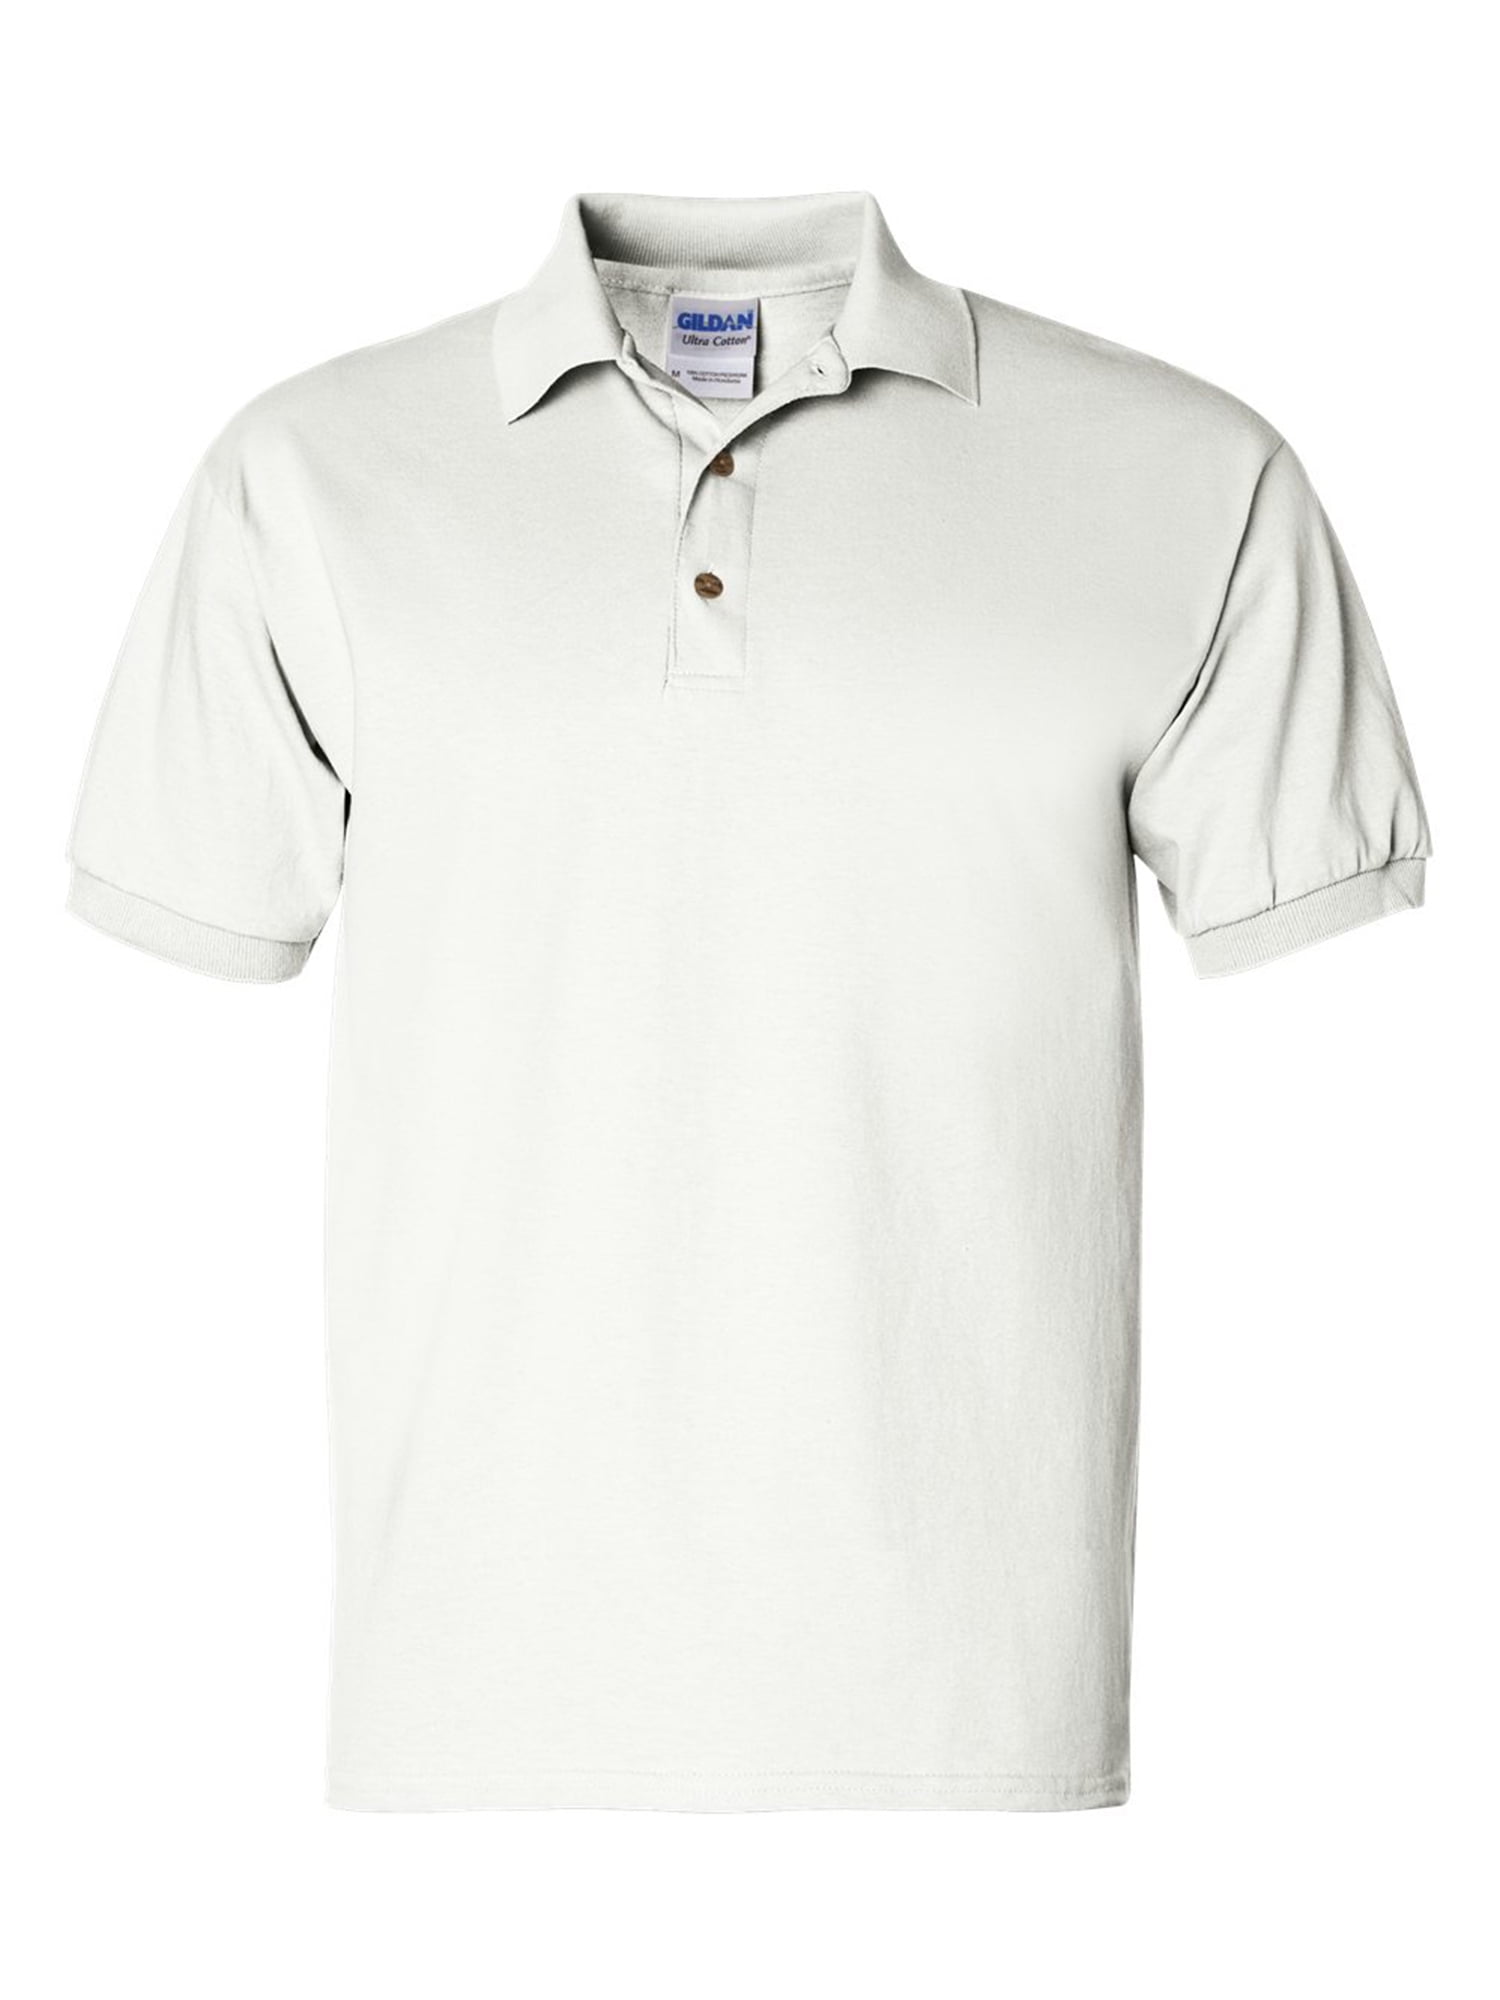 HUUB Sportswear Mens Long Sleeve Polo Shirt BLACK Button Down Tee Sizes XS-XL